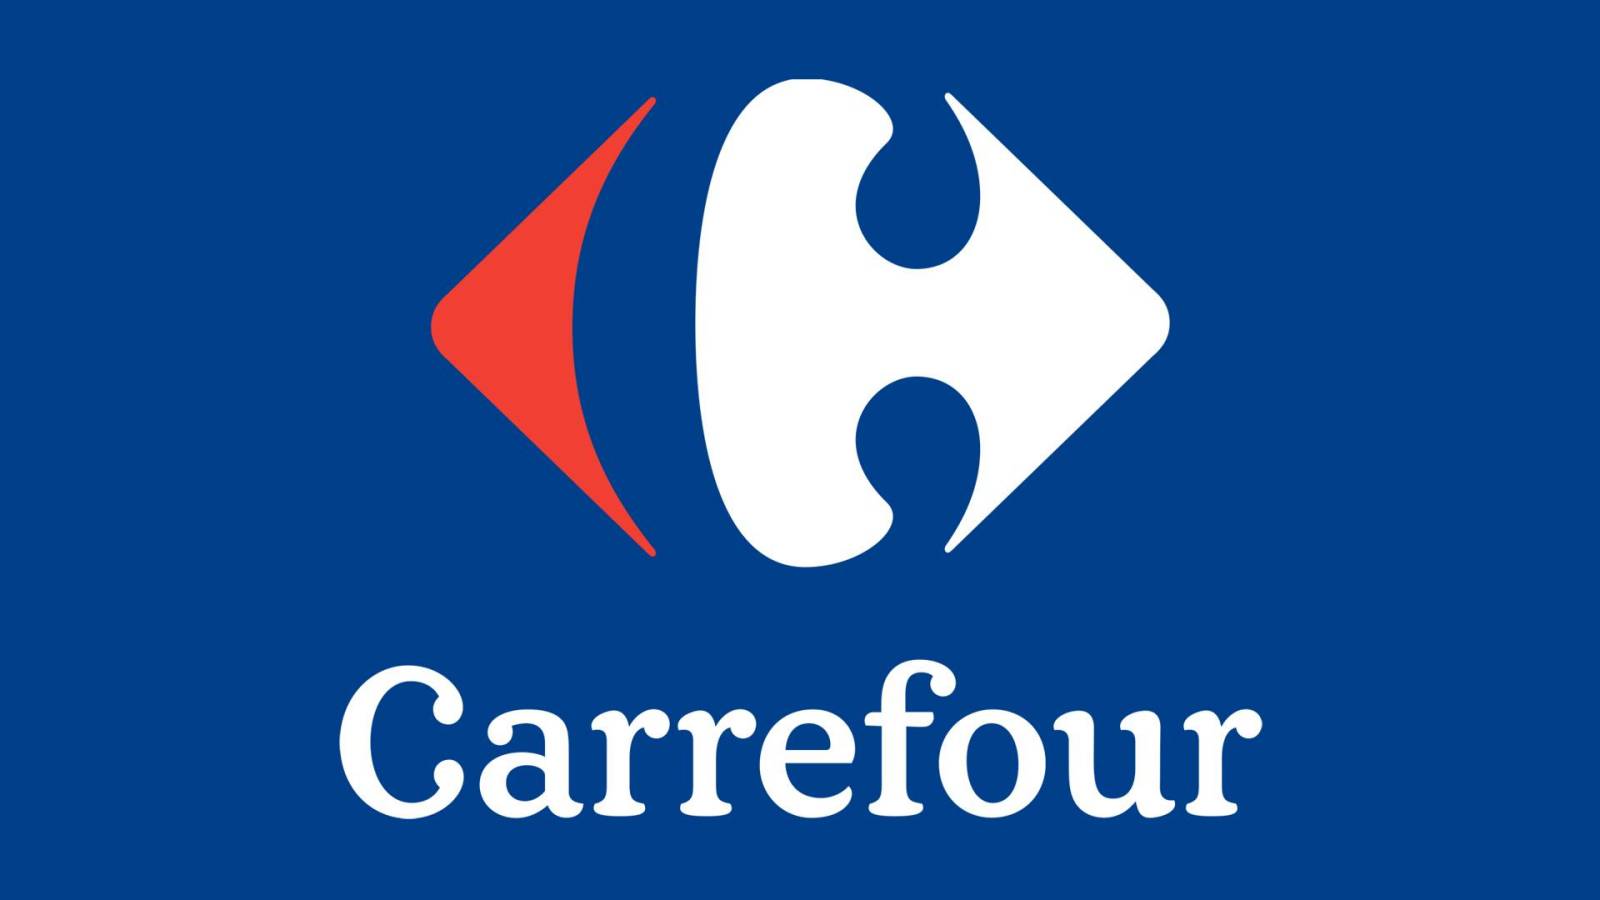 Carrefour verwöhnt